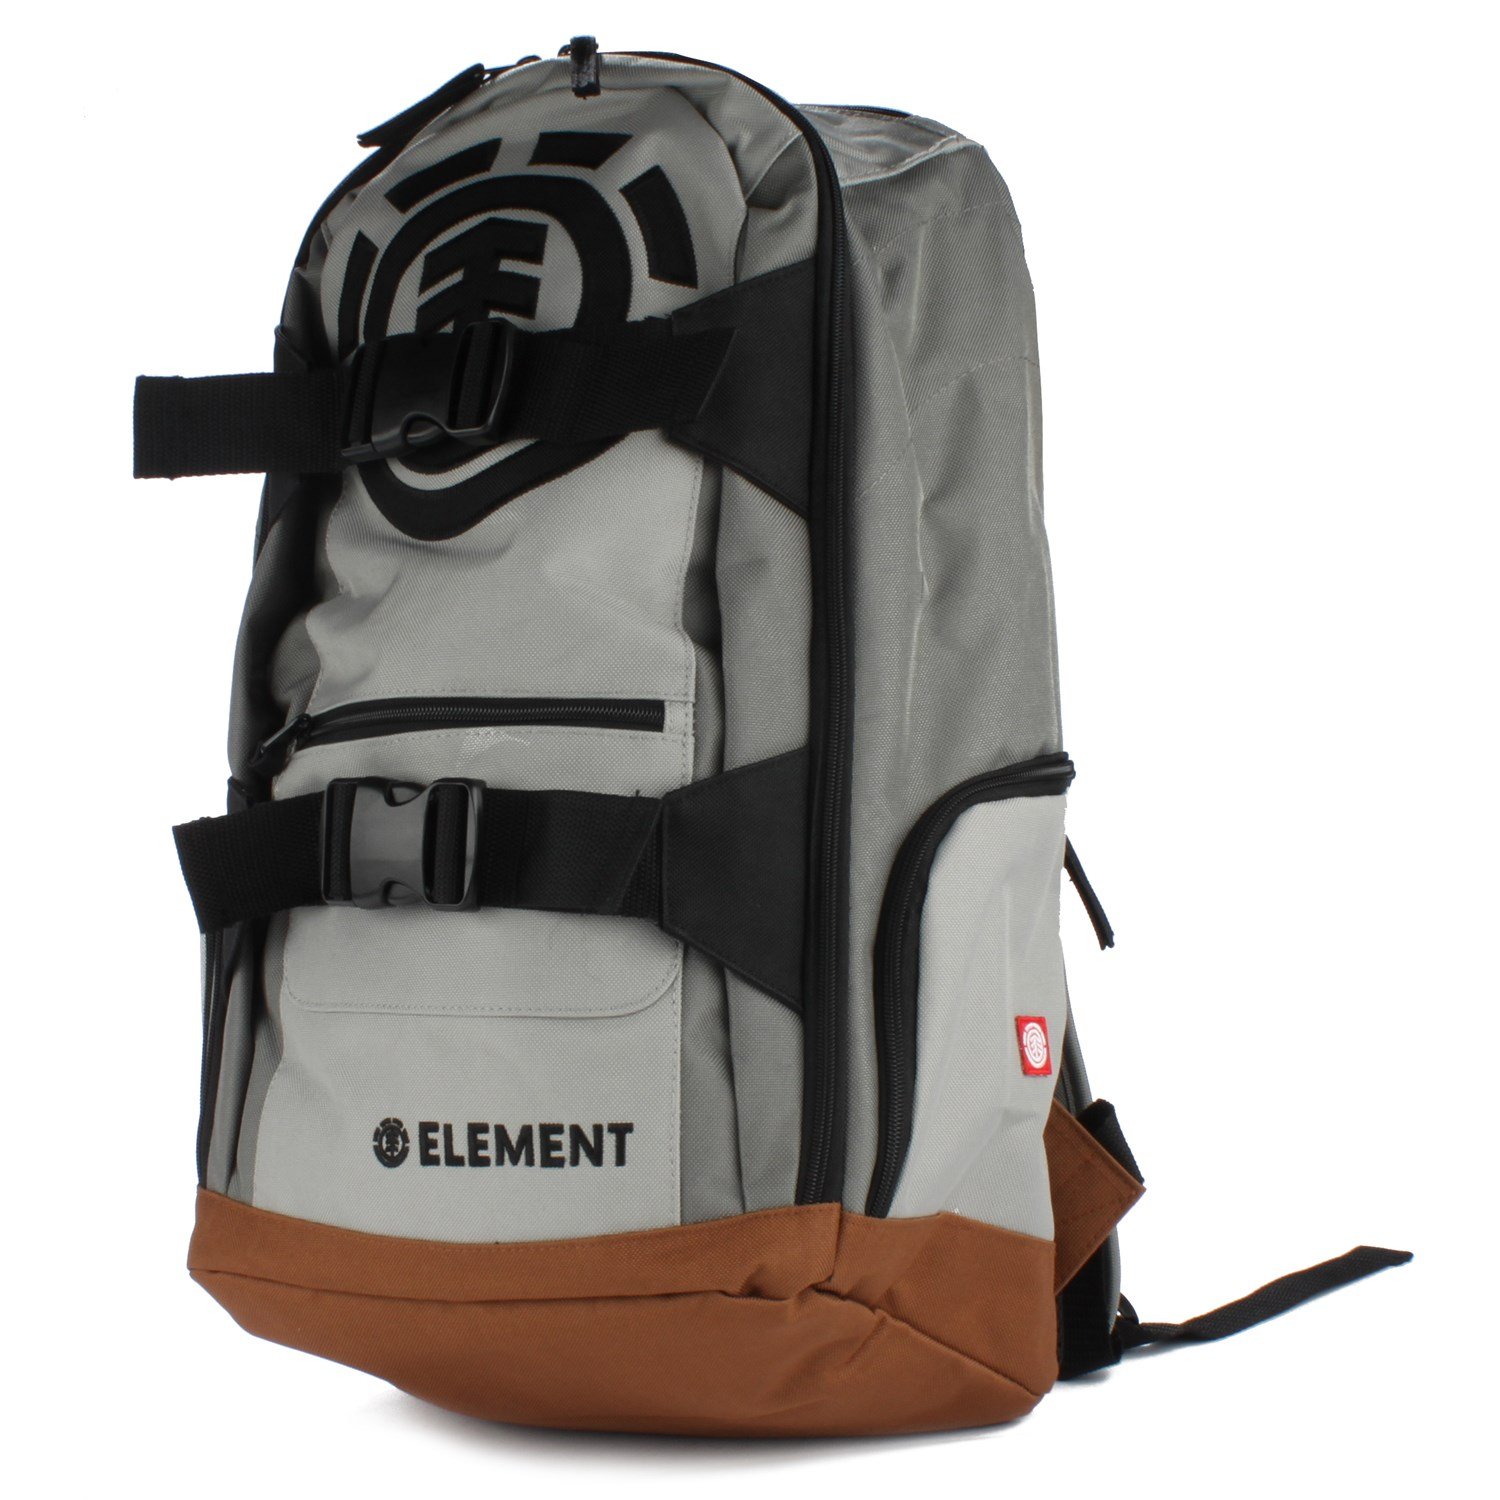 Element pack. Element Mohave Backpack. Рюкзак под скейт Elementh. 8 Element сумка. Aluminium elements in Backpack.